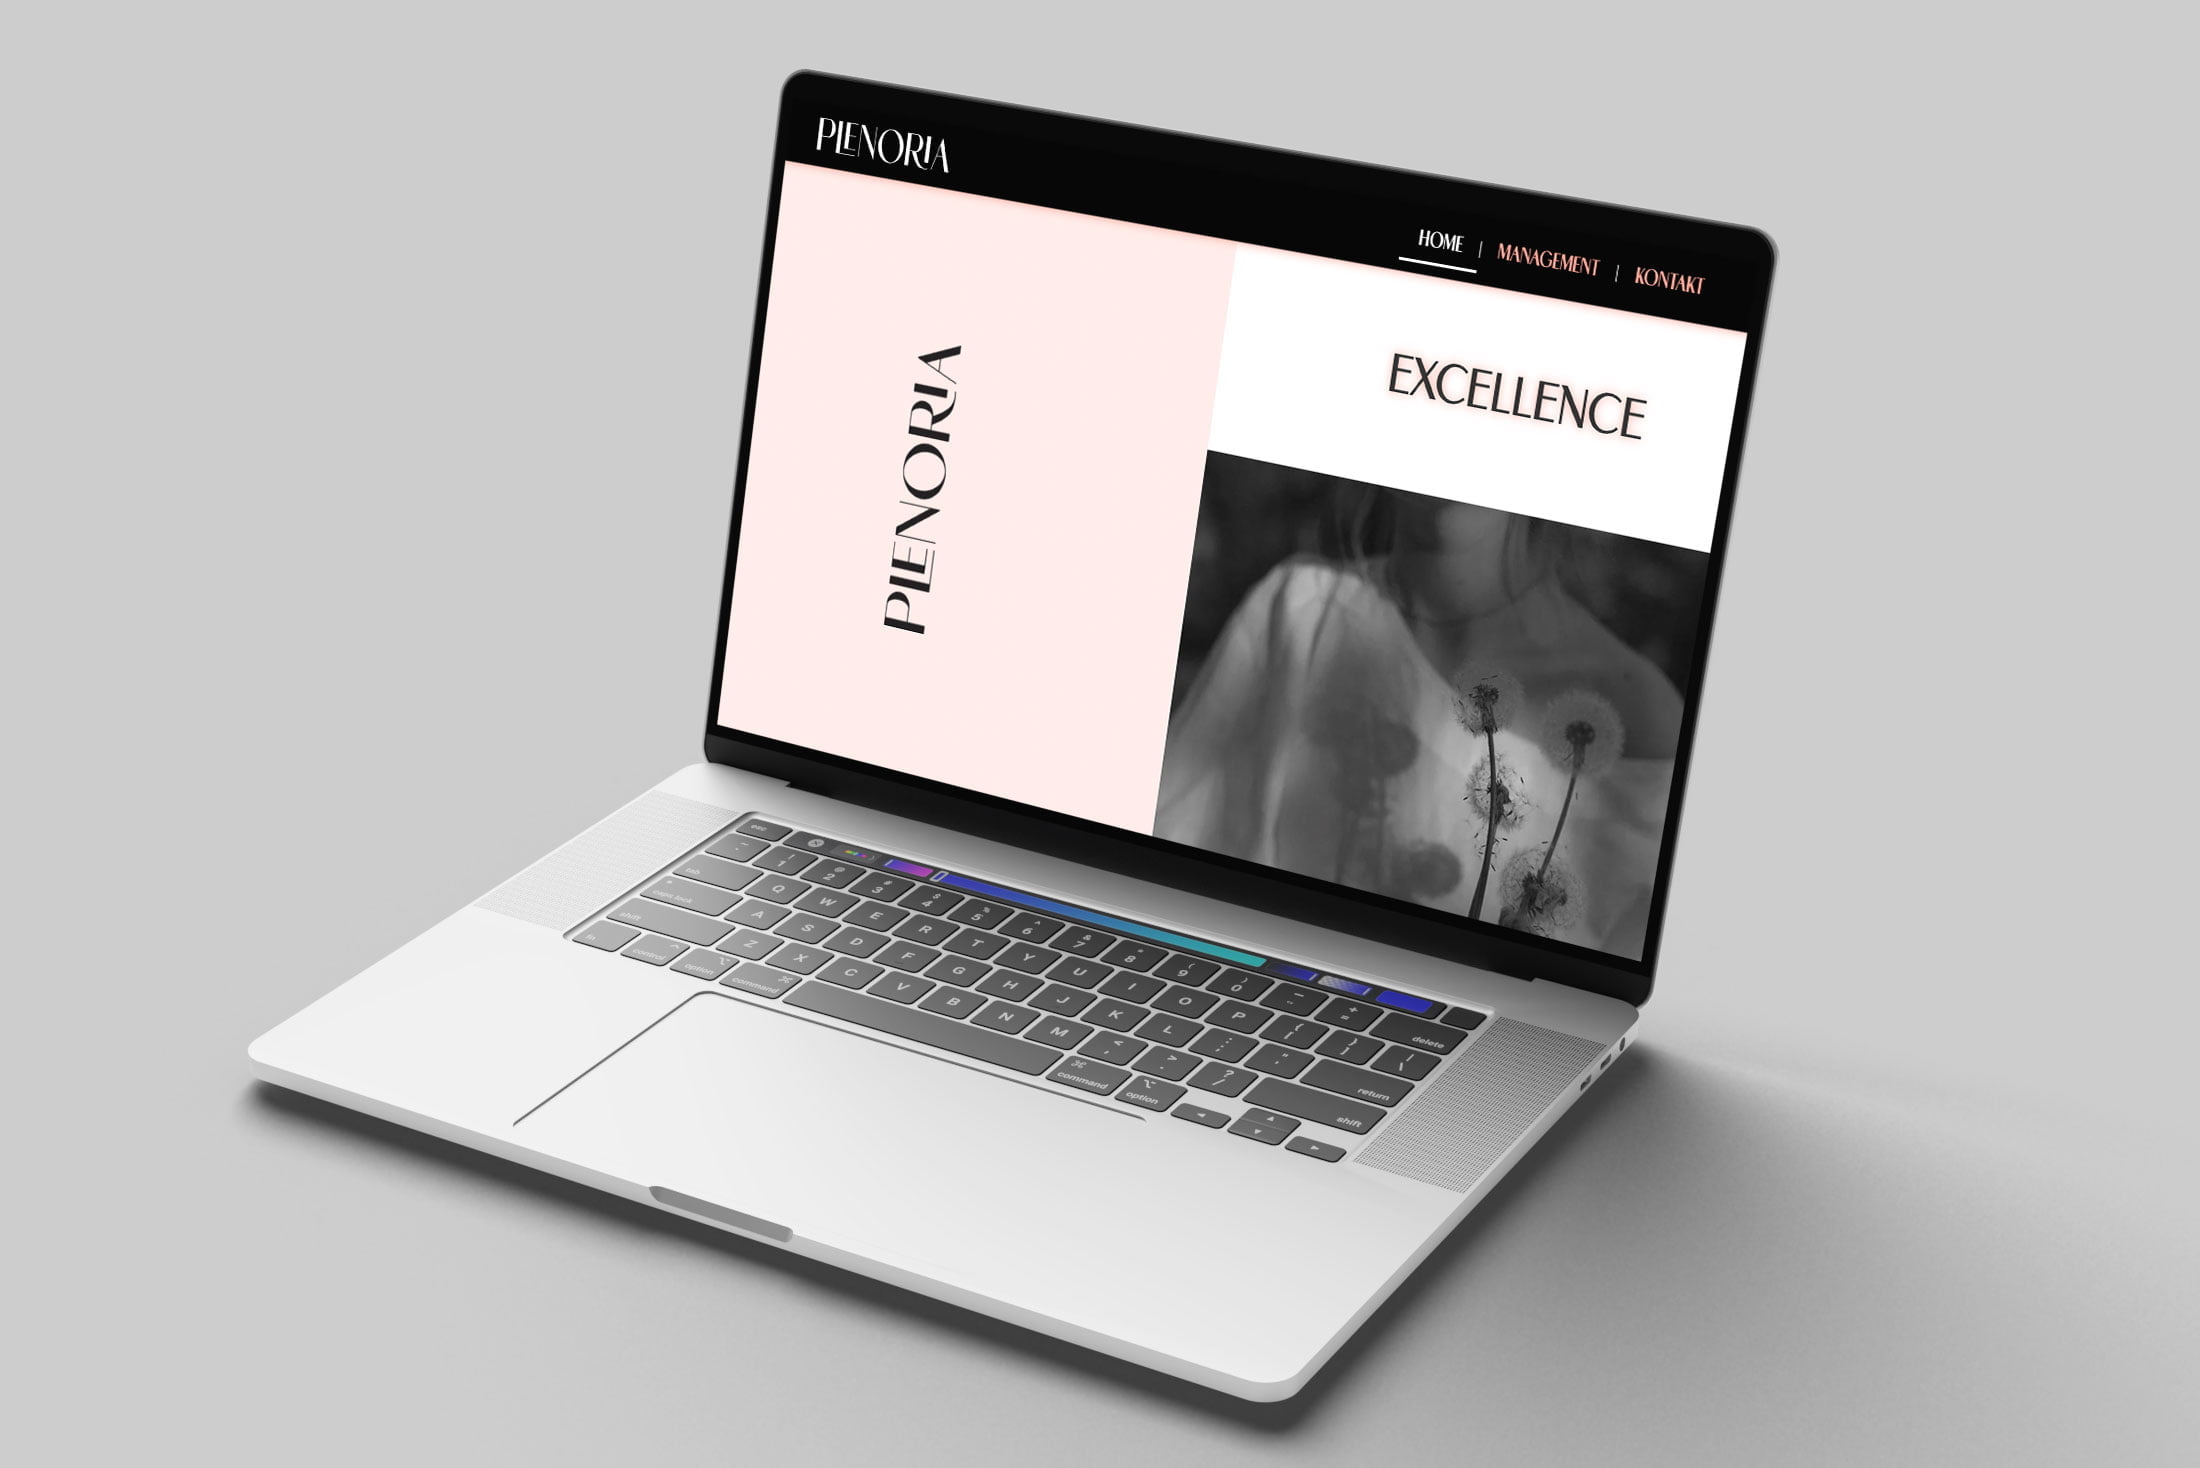 dizajn izrada web stranice plenoria dizajn web stranice dizajn logotipa branding